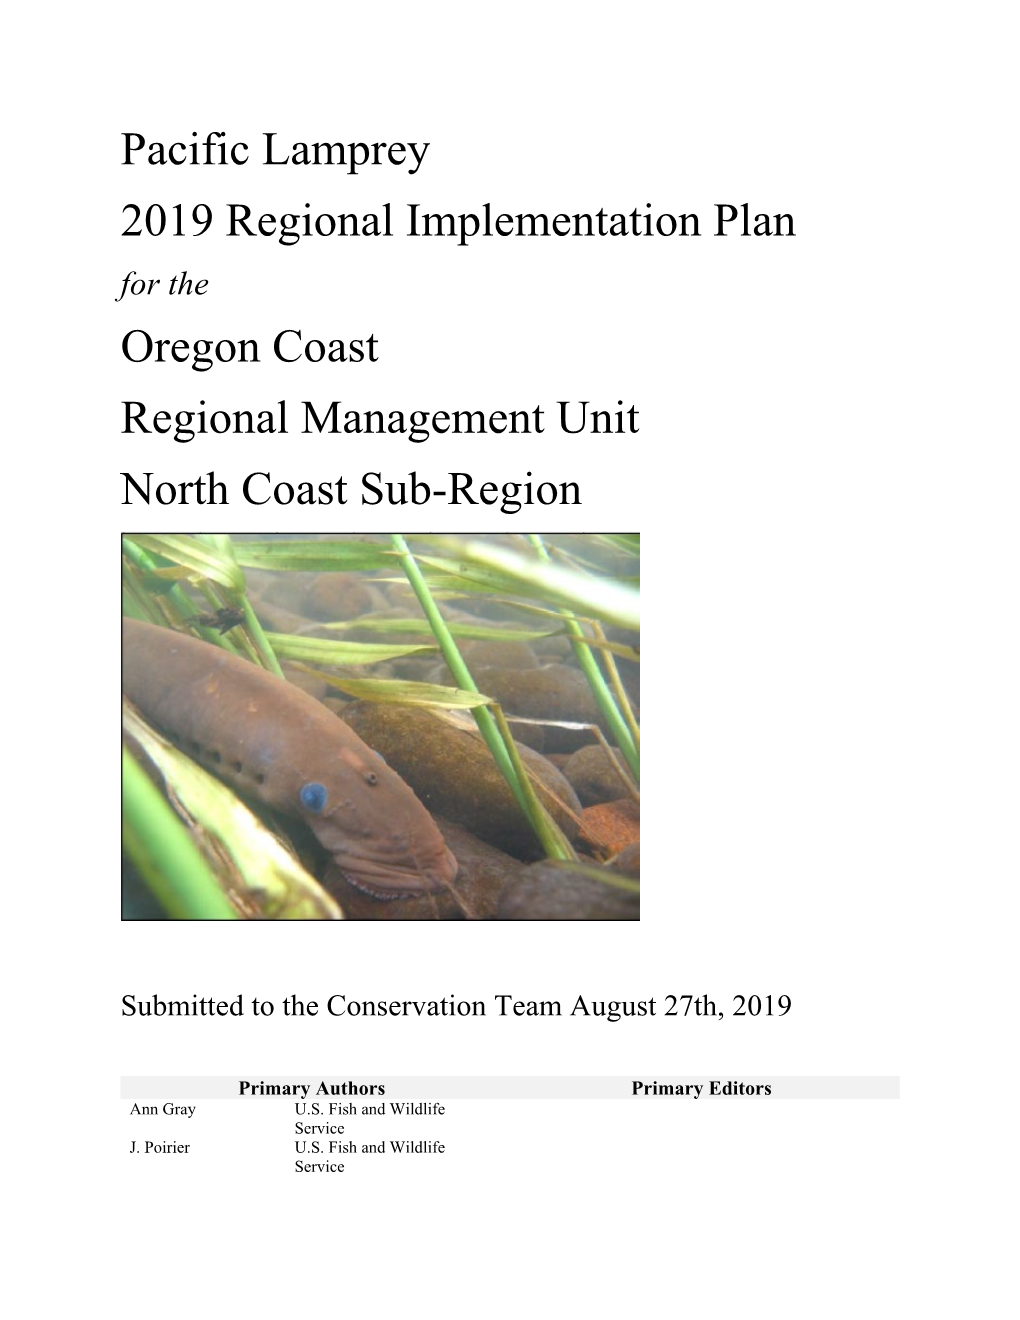 Pacific Lamprey 2019 Regional Implementation Plan Oregon Coast